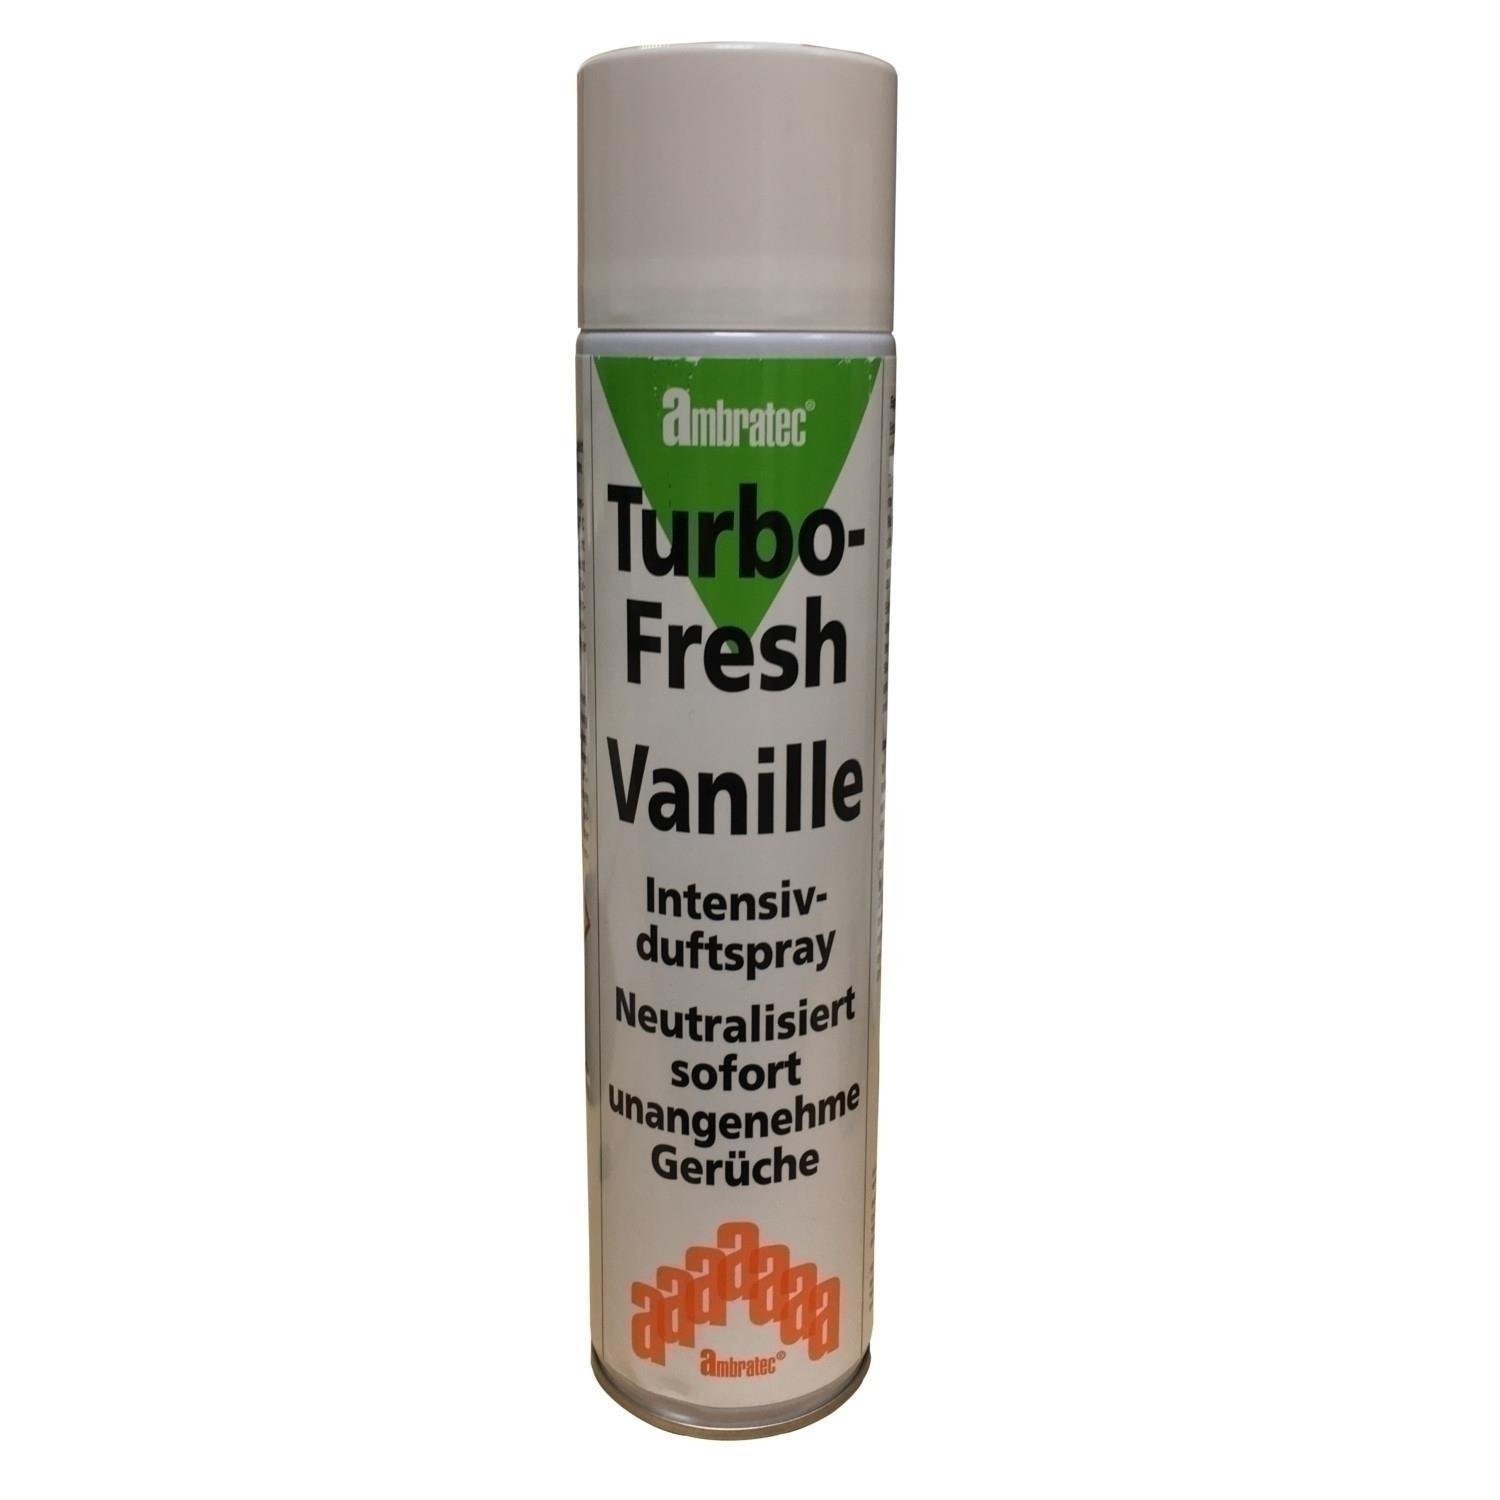 Ambratec Turbo-Fresh Vanille